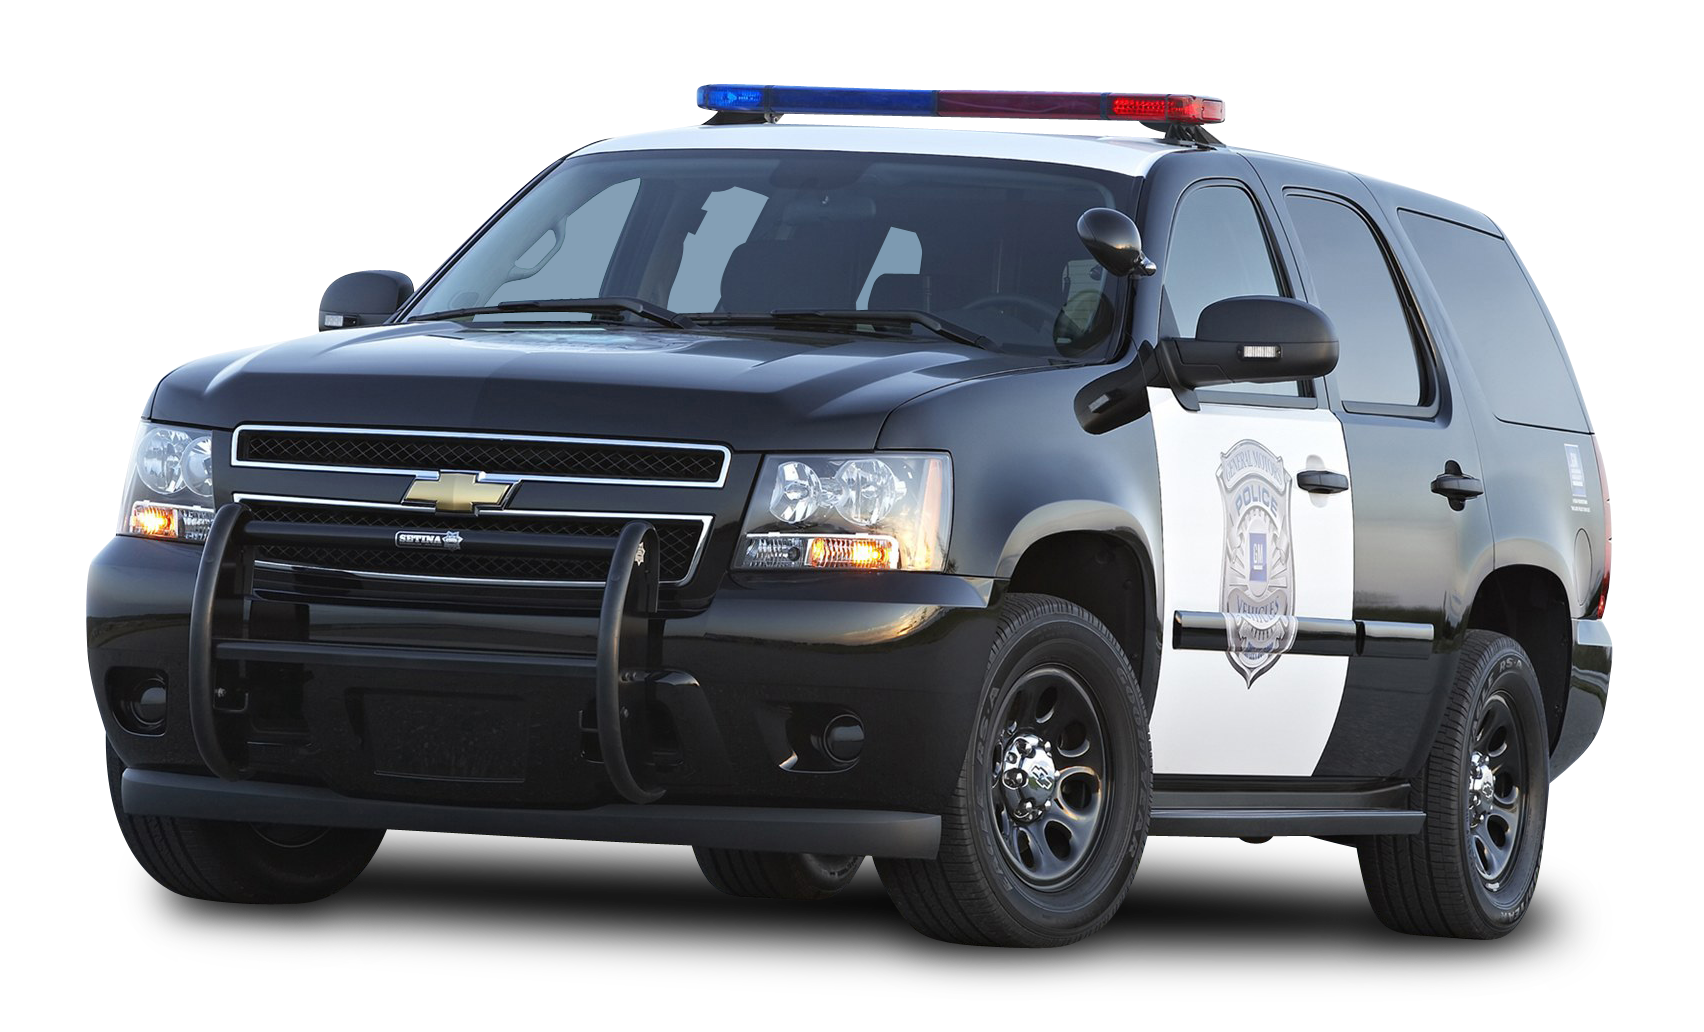 Black Chevy Tahoe Police SUV PPV Car